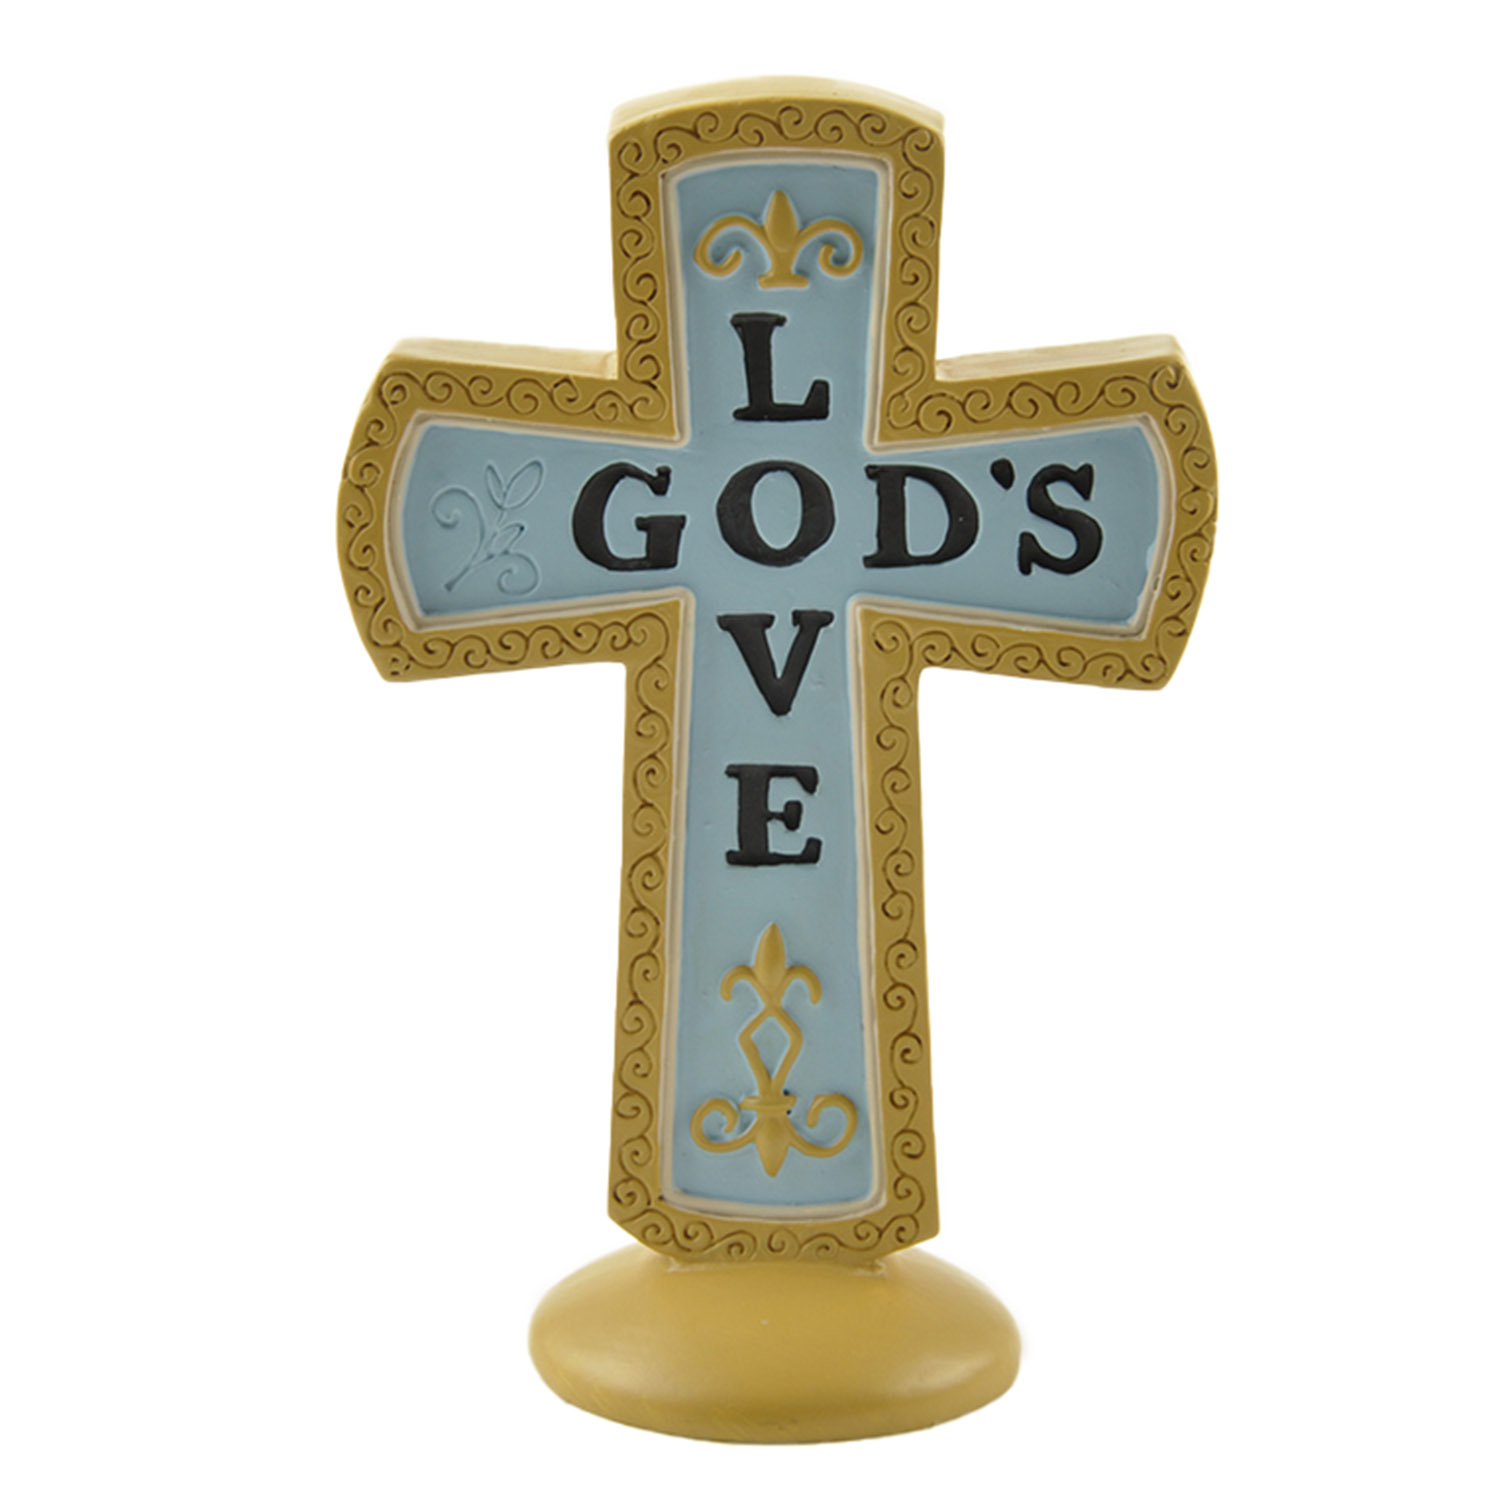 Inspirational Resin Cross with 'God's Love' on Blue Cross Inscription - Decorative Religious Keepsake for Spiritual Inspiration 151-89248